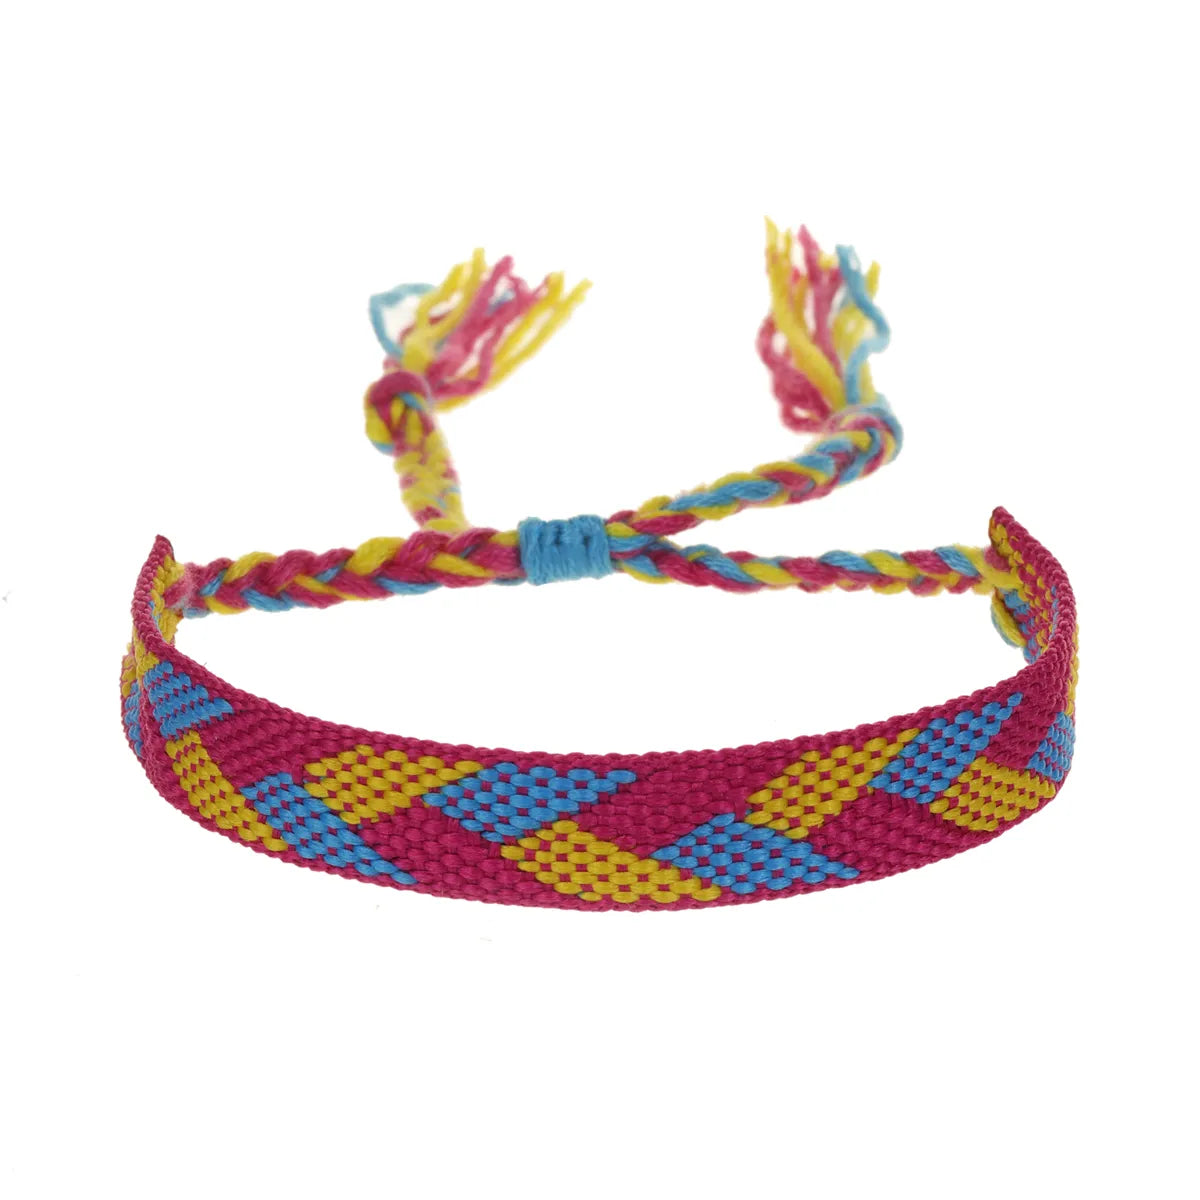 Nepal Woven Friendship Bracelets Adjustable Braided Bracelets Woven String Bracelet with Sliding Knot Closure for Kids Women Men